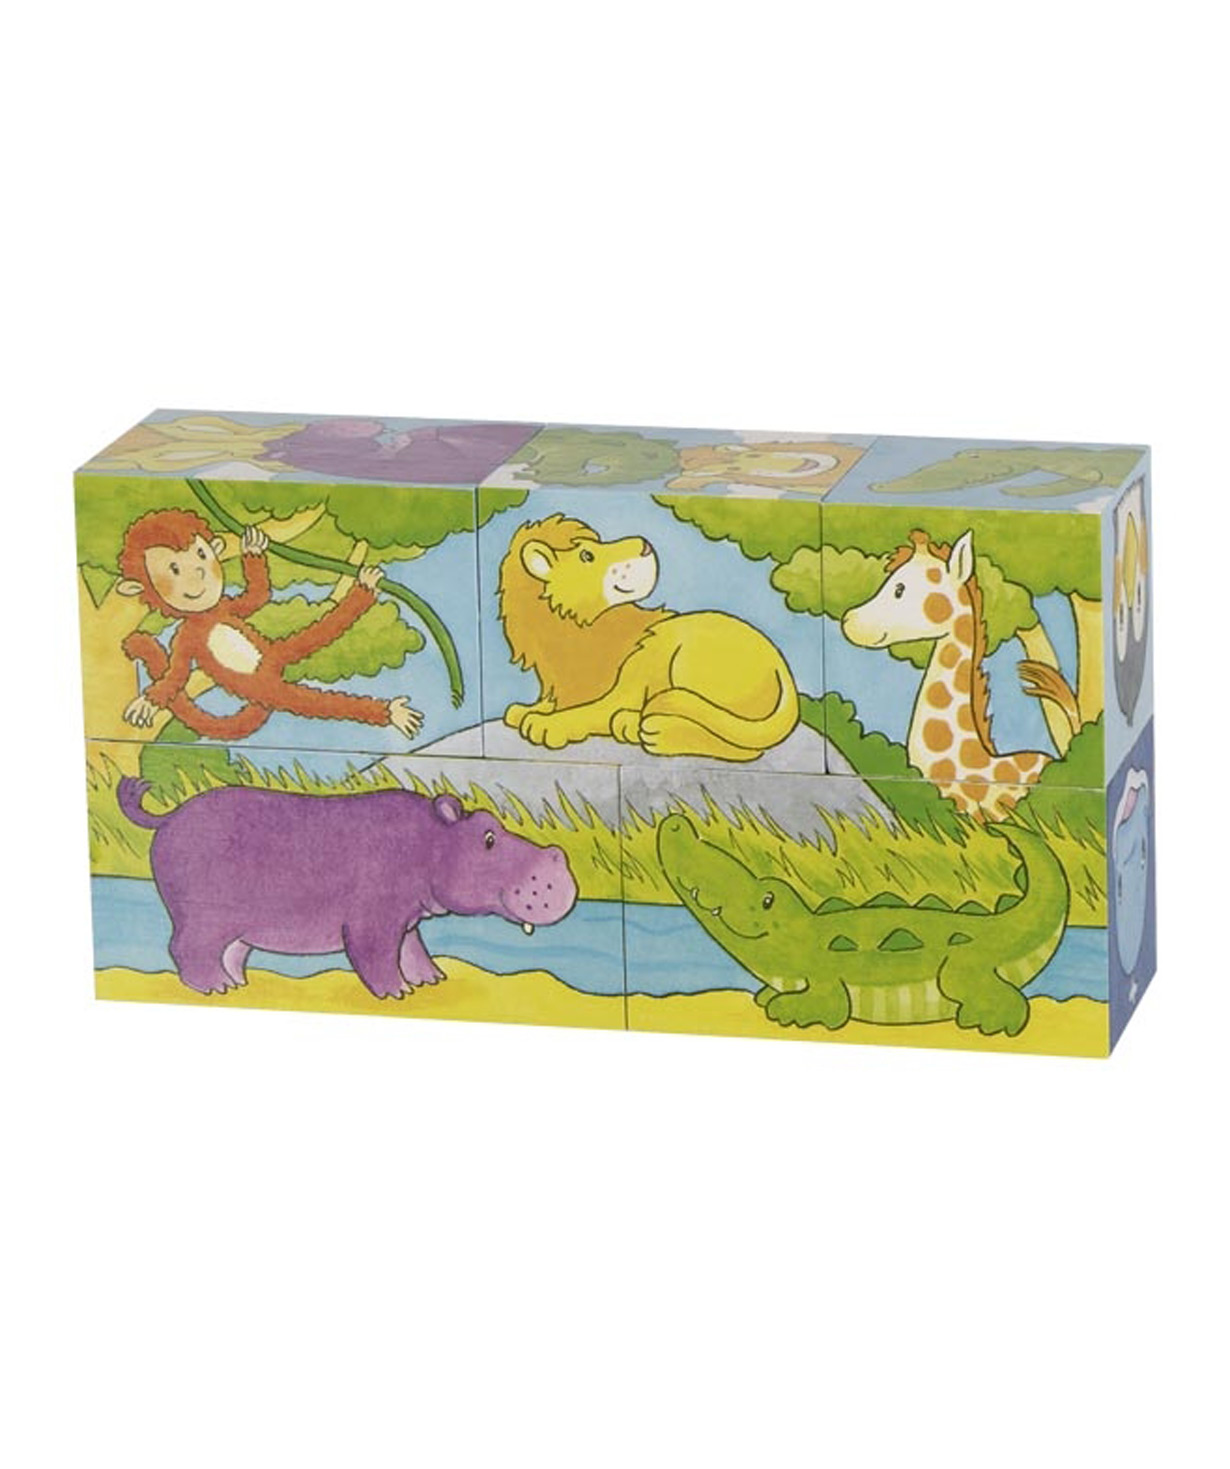 Toy `Goki Toys` cube puzzle Safari